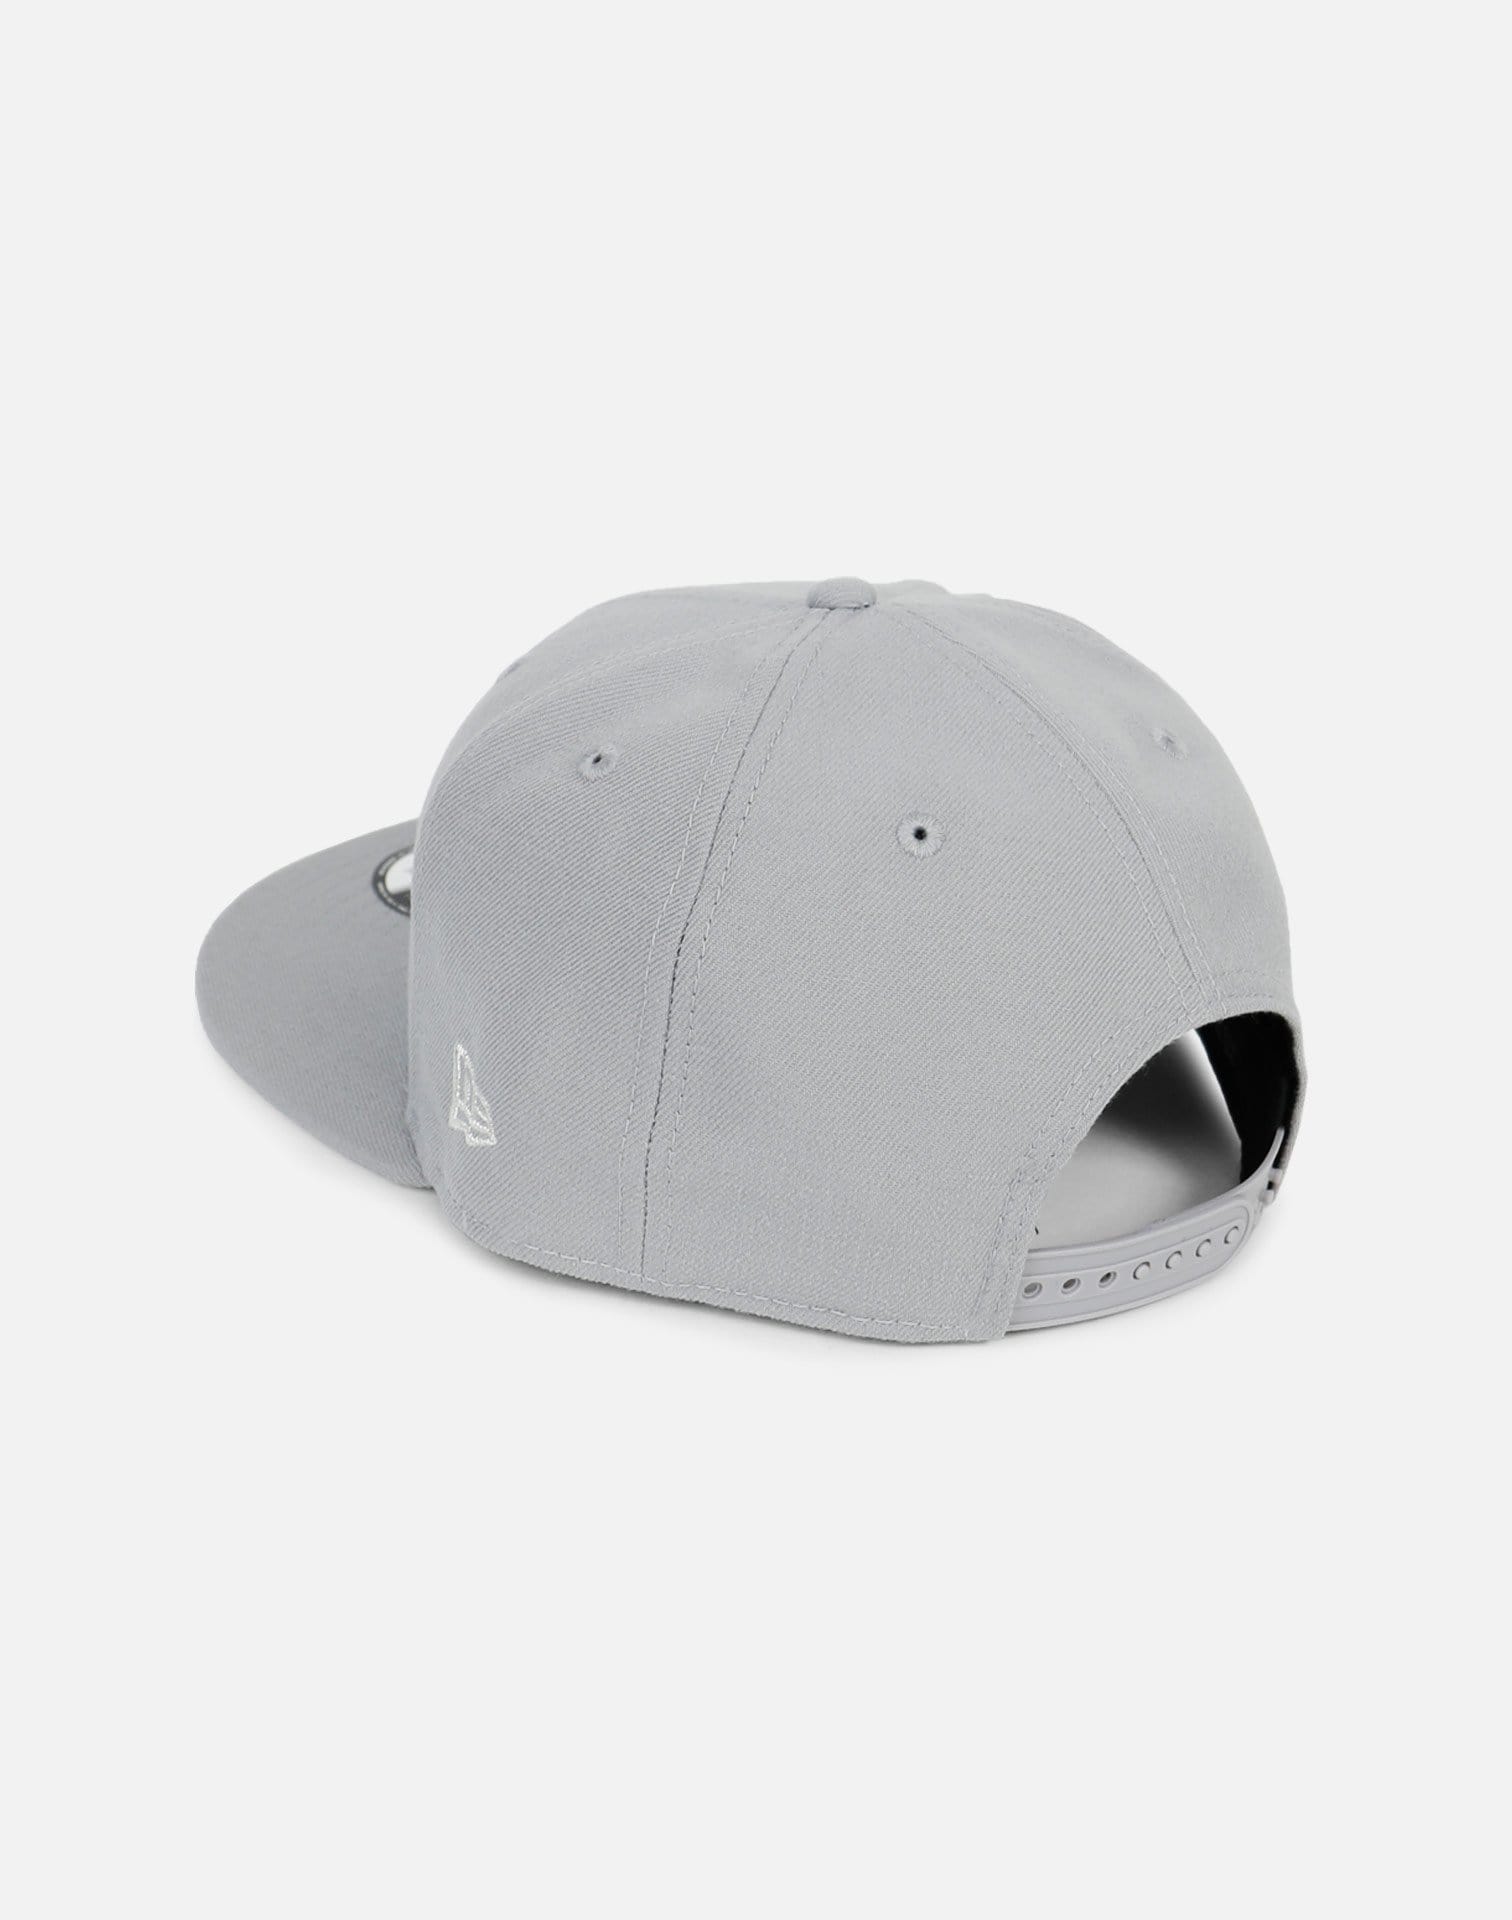 New Era Philadelphia Phillies 'Pure Money' Snapback Hat (Grey/Metallic Silver-White)